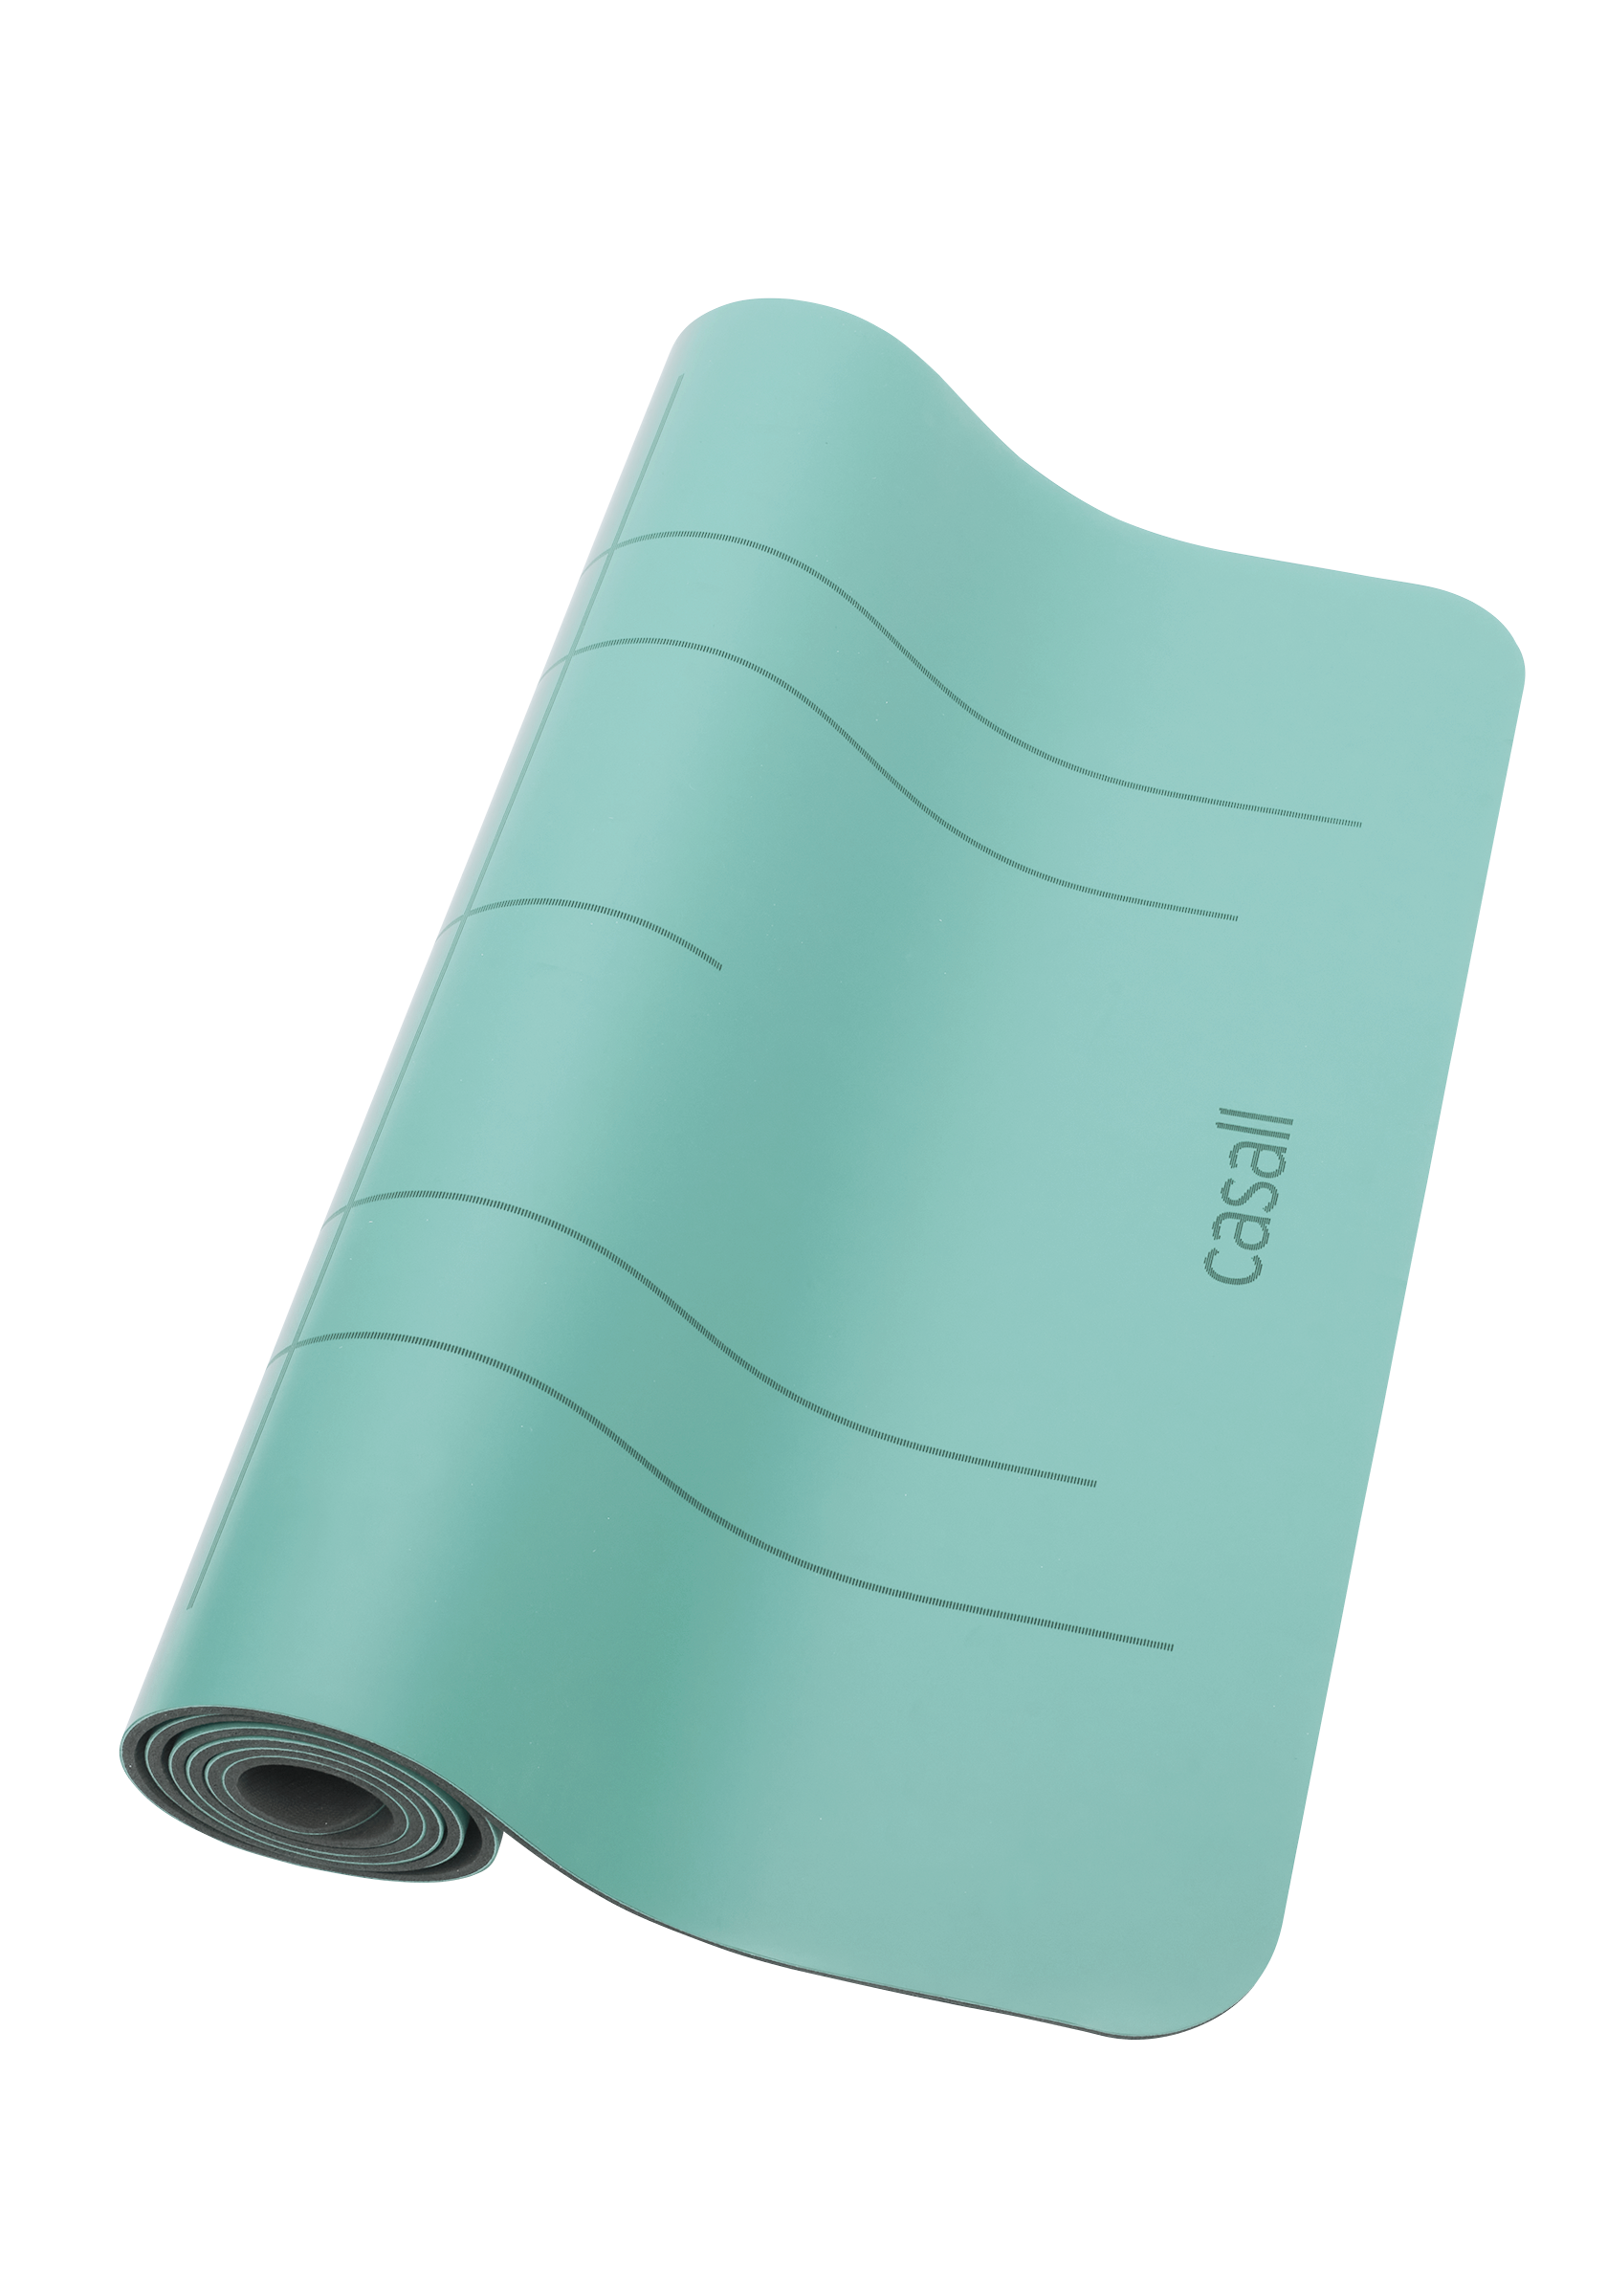 Yoga mat Grip&Cushion III 5mm - Pastel mint